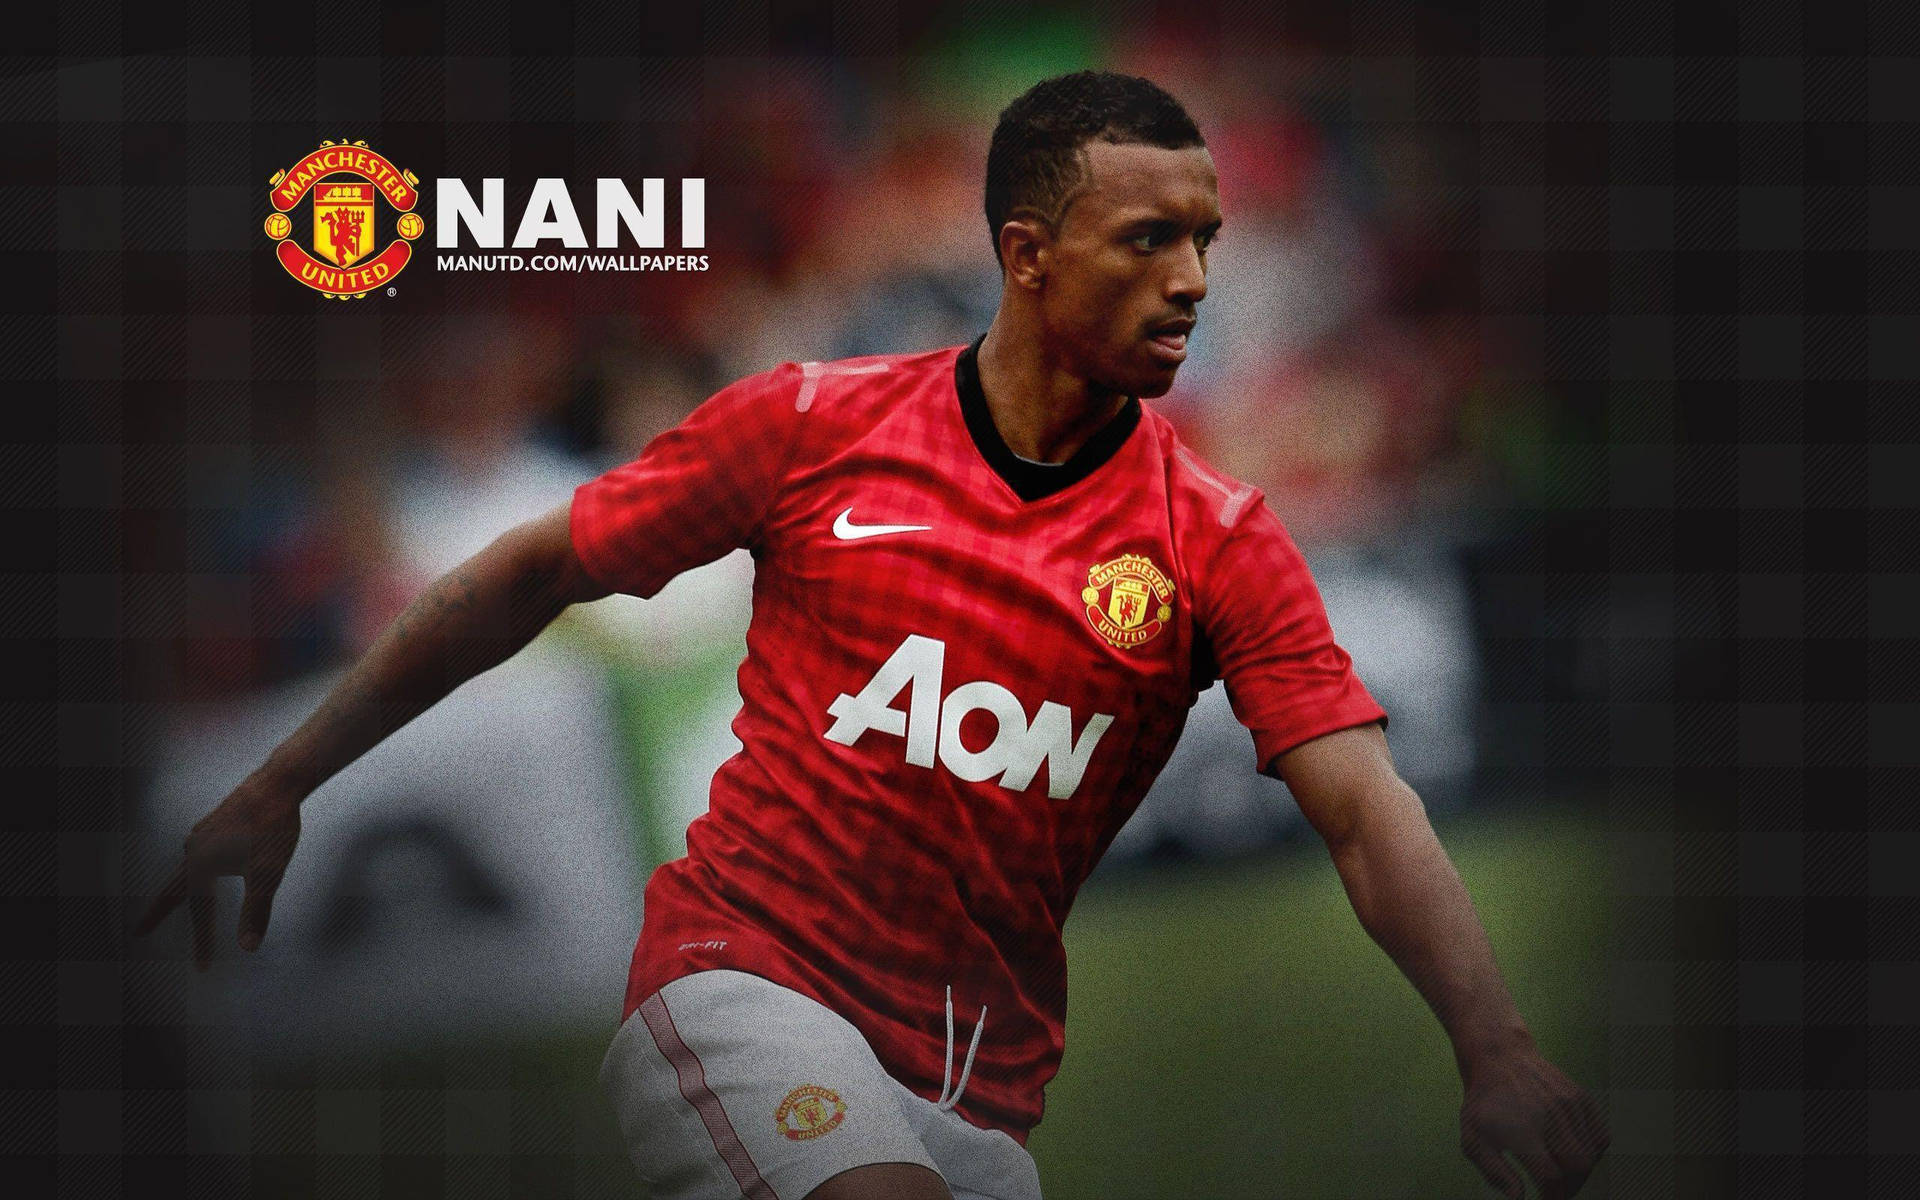 Manchester United Players Feature: Nani